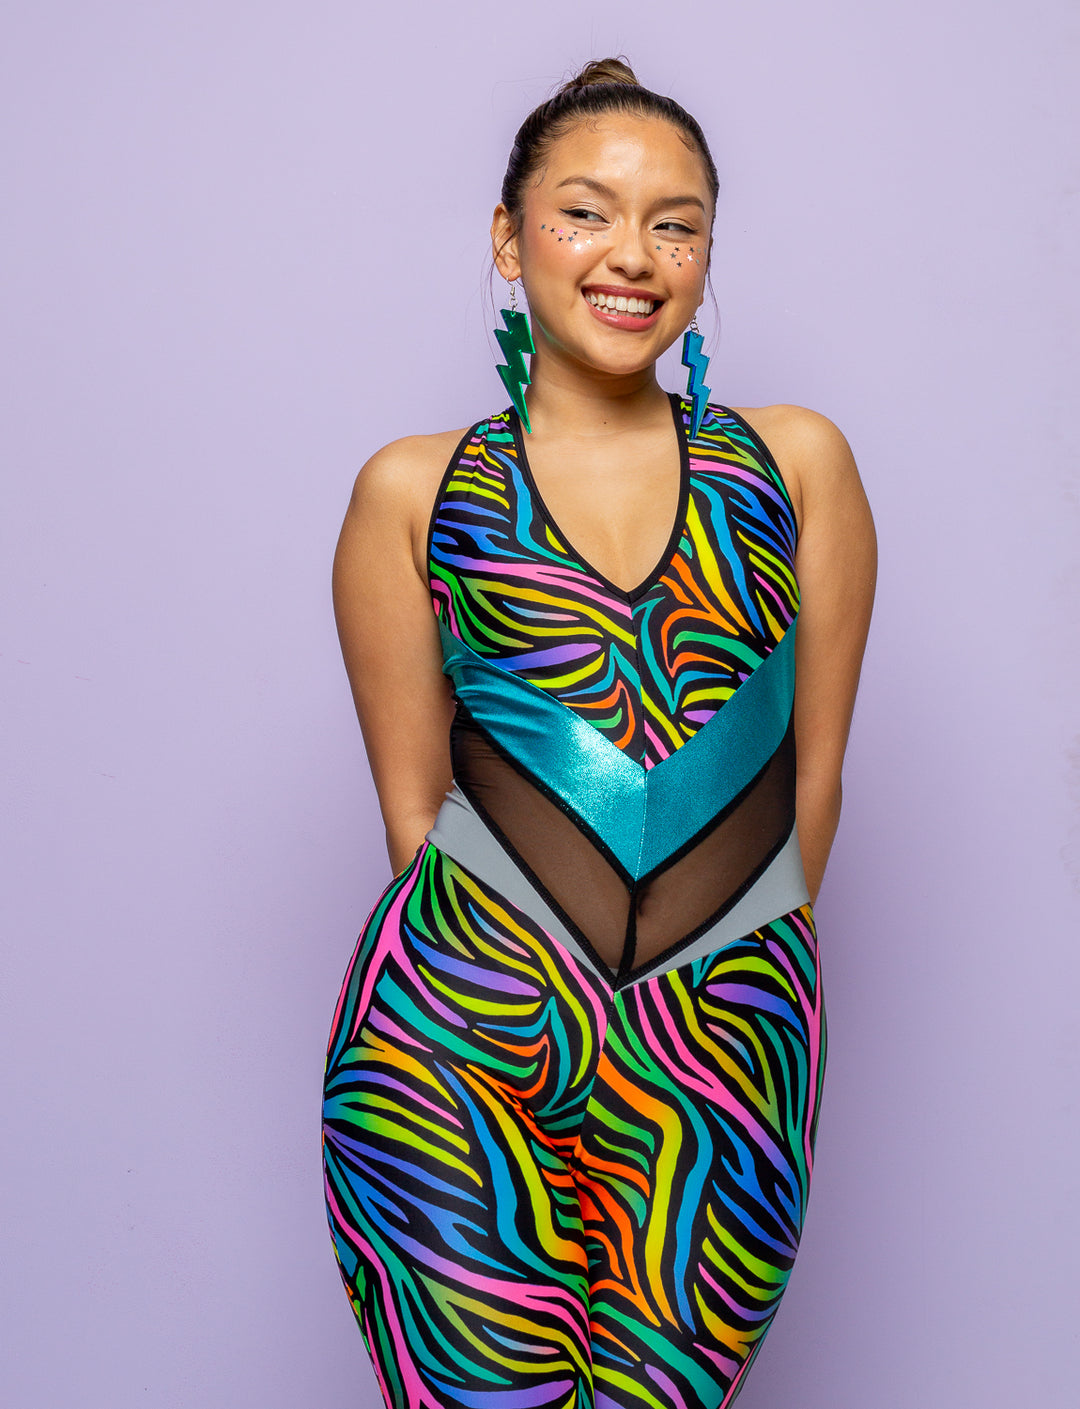 Woman modelling a multi coloured zebra print catsuit.